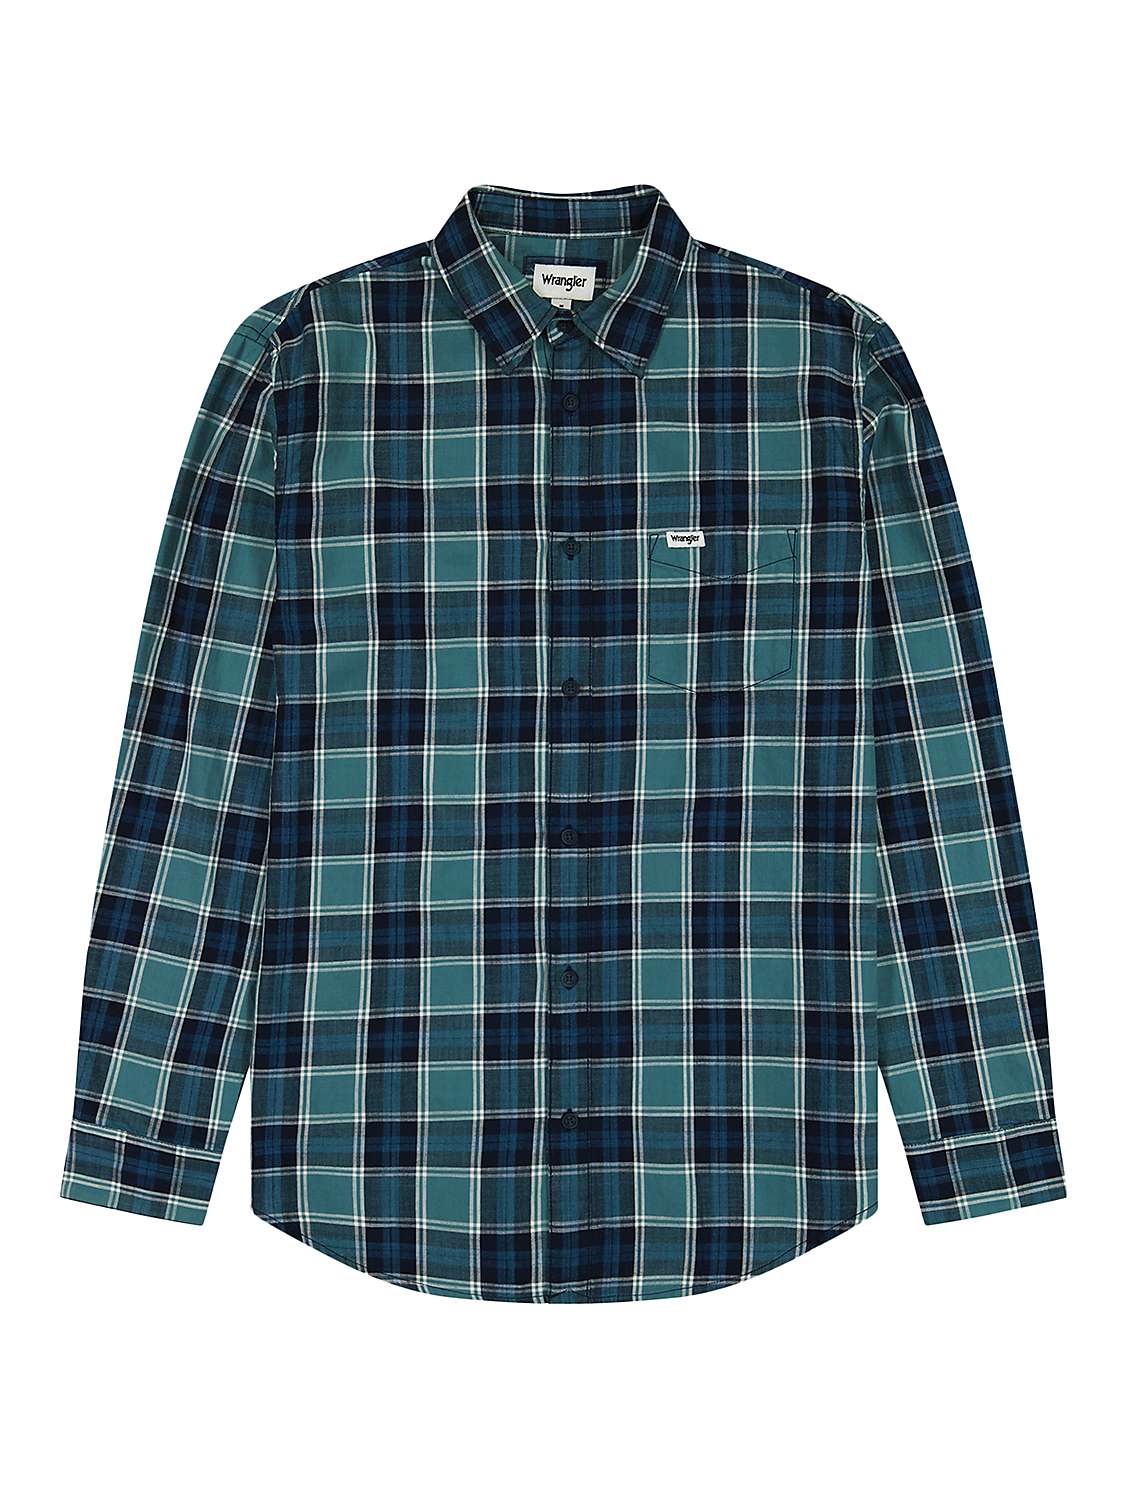 Buy Wrangler Long Sleeve One Pocket Check Shirt Online at johnlewis.com